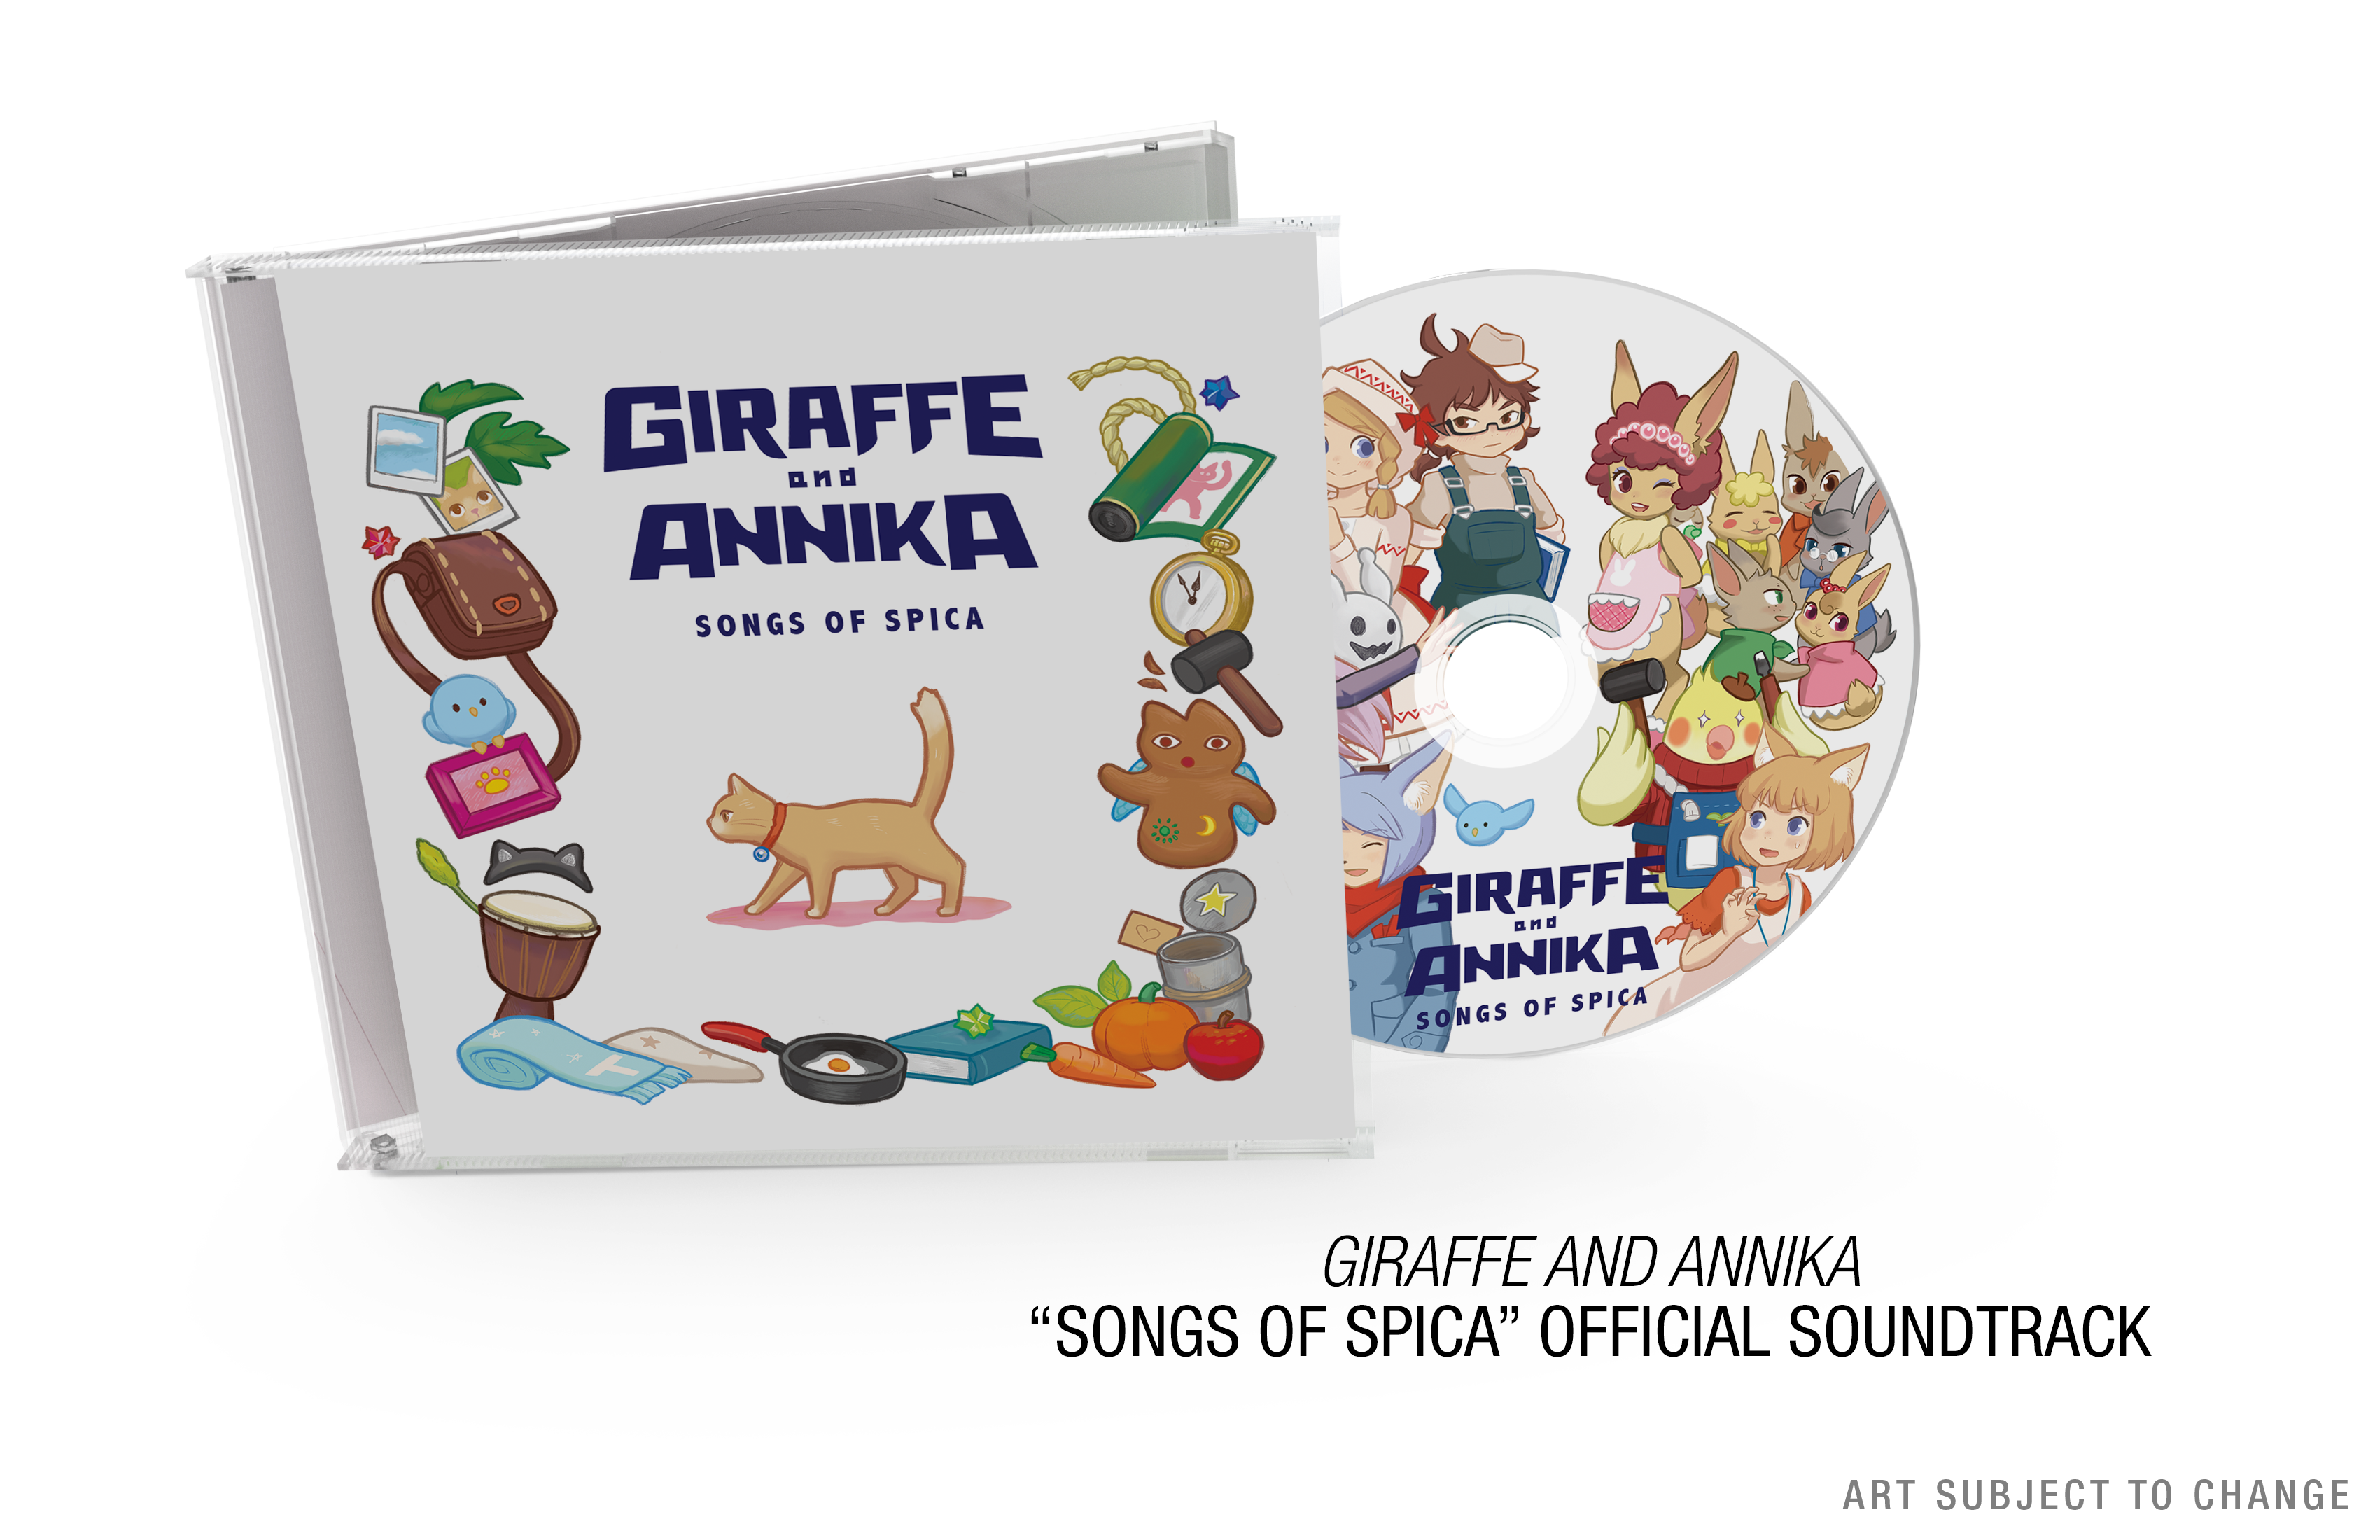 Giraffe and Annika Musical Mayhem Edition - Nintendo Switch™